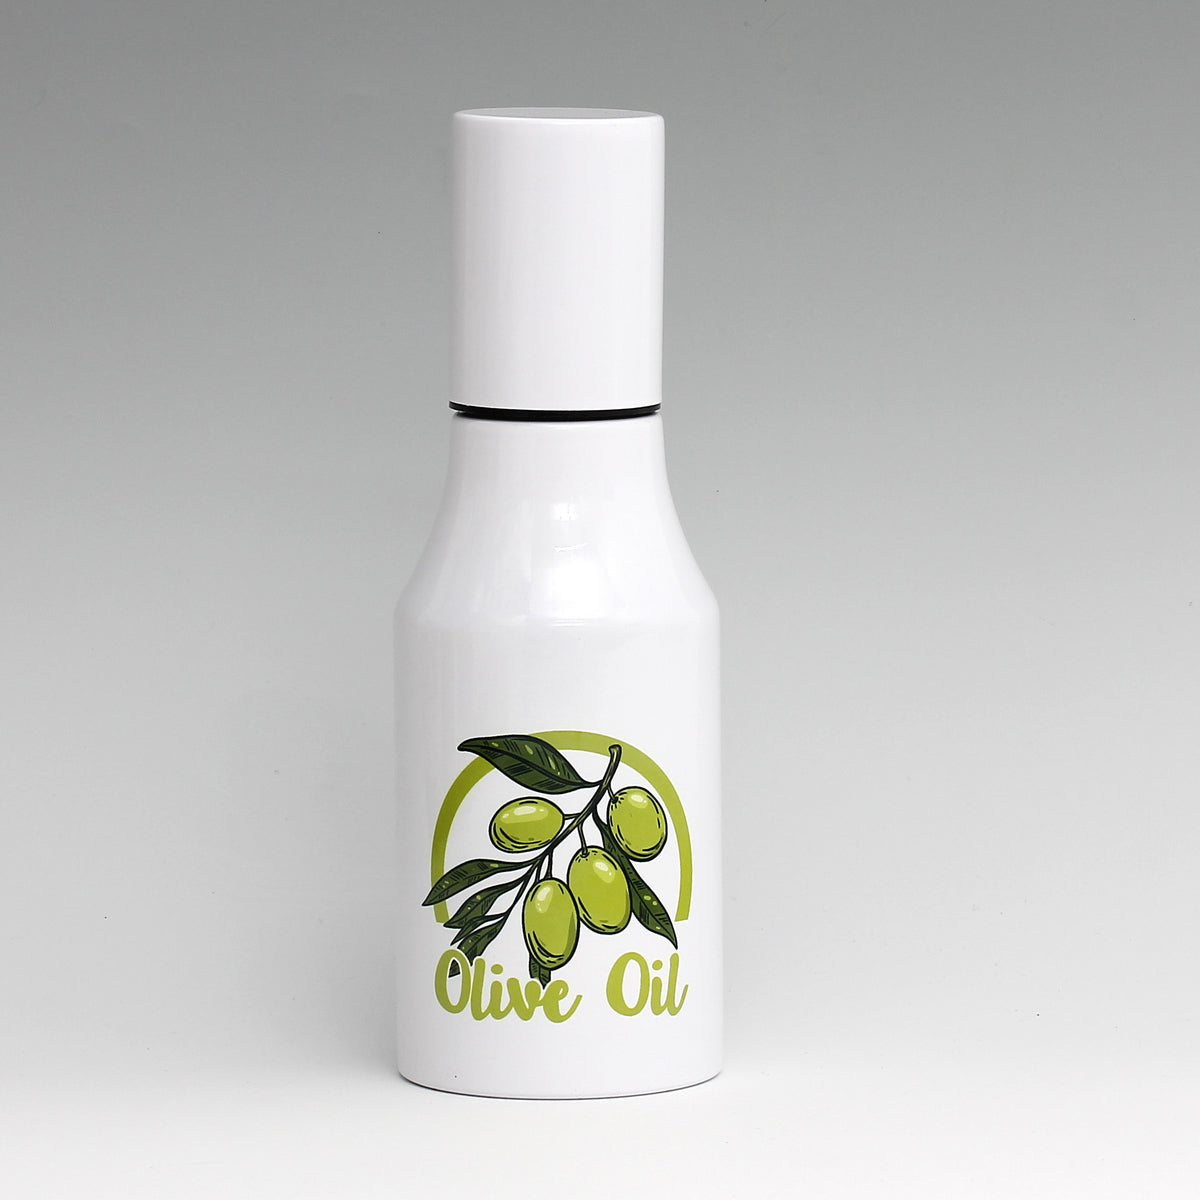 SUBLIMART: Olive Oil Dispenser with non-drip pourer and dust cover cap (Design 20)